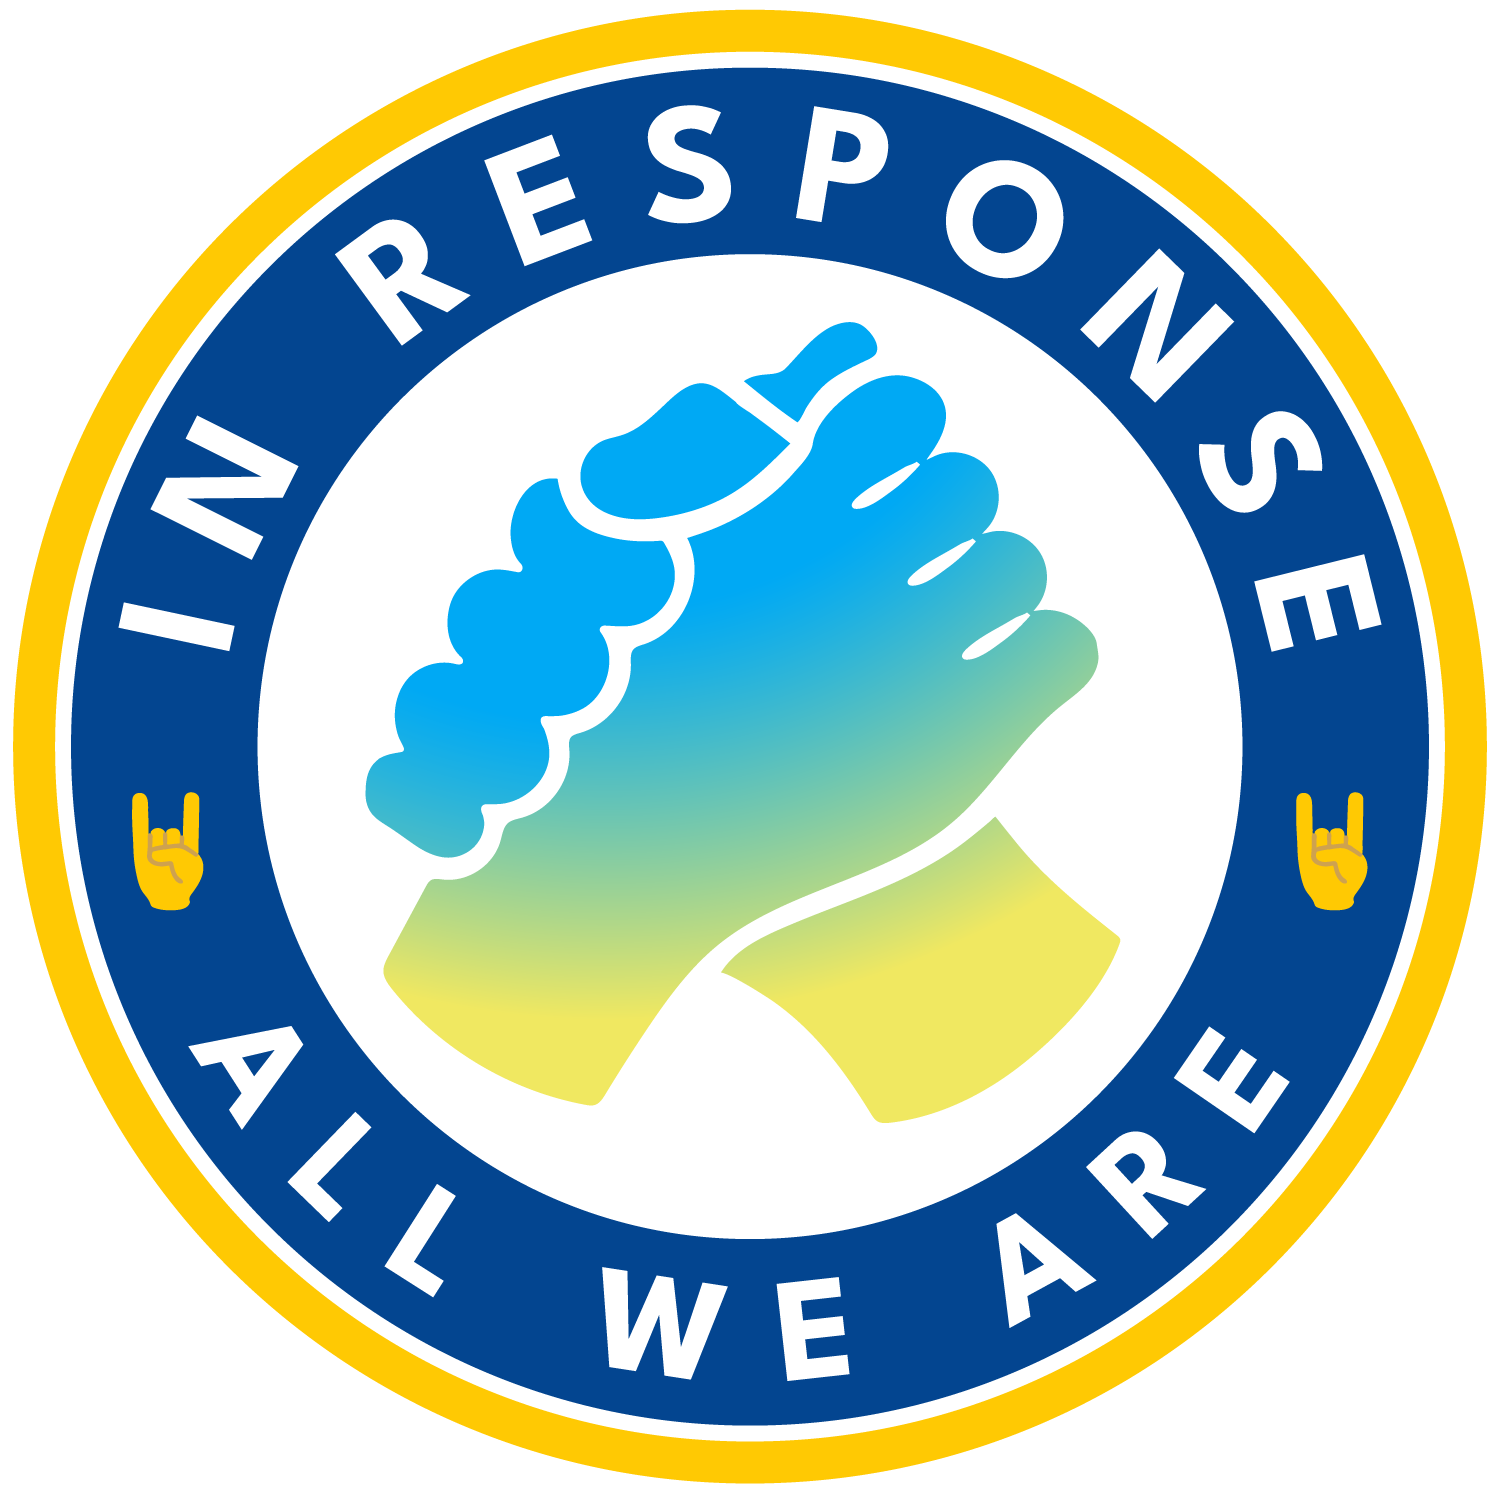 In Response Logo Design